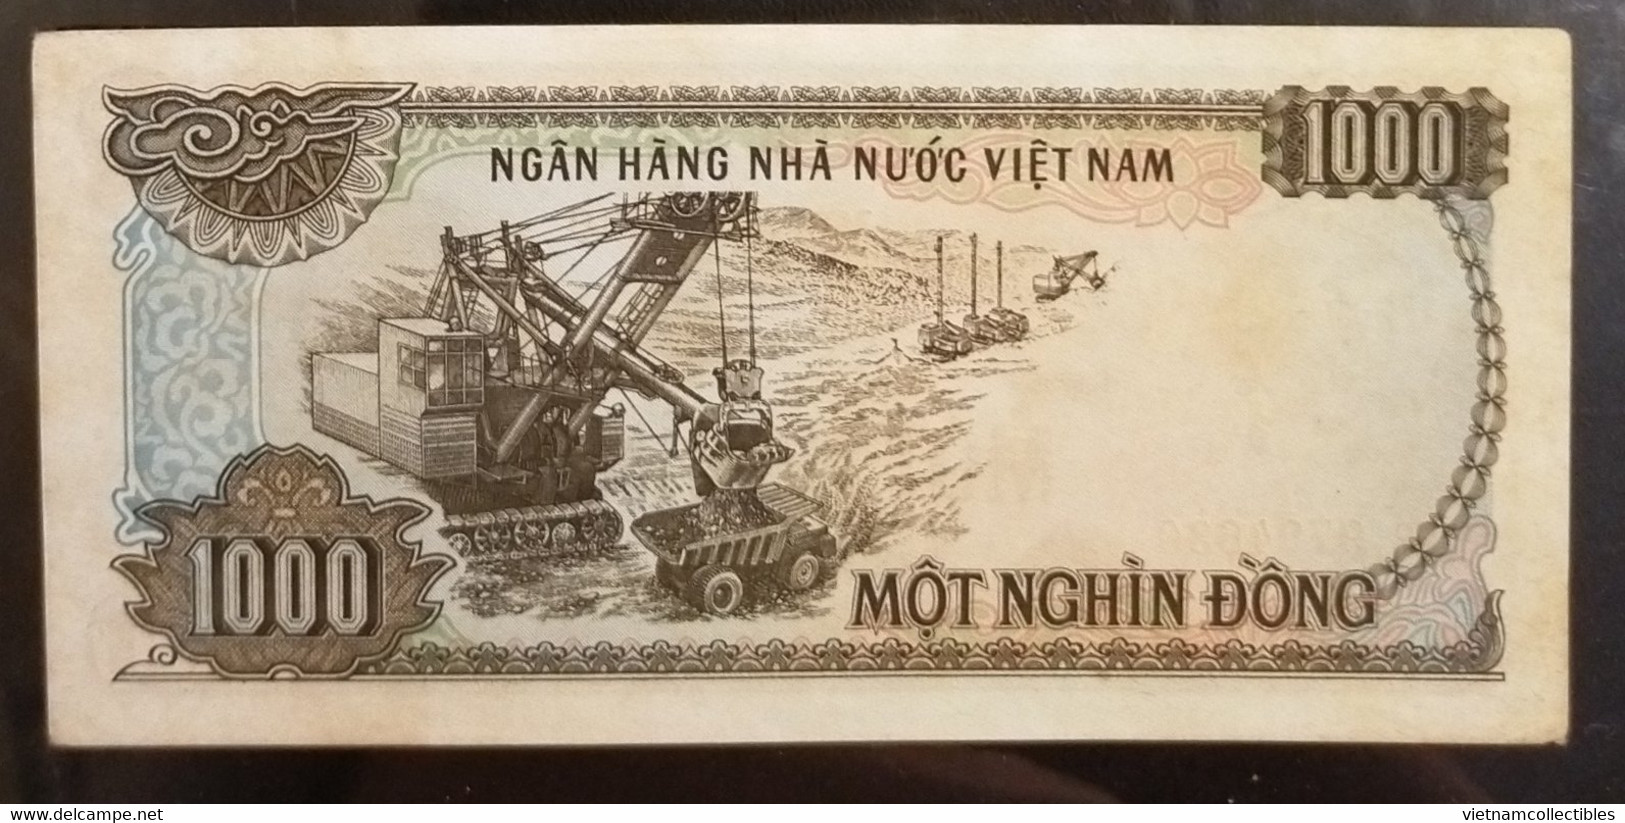 Vietnam Viet Nam 1000 1,000 Dong AU Banknote Note 1987 - Pick # 102 / 02 Photos - Viêt-Nam